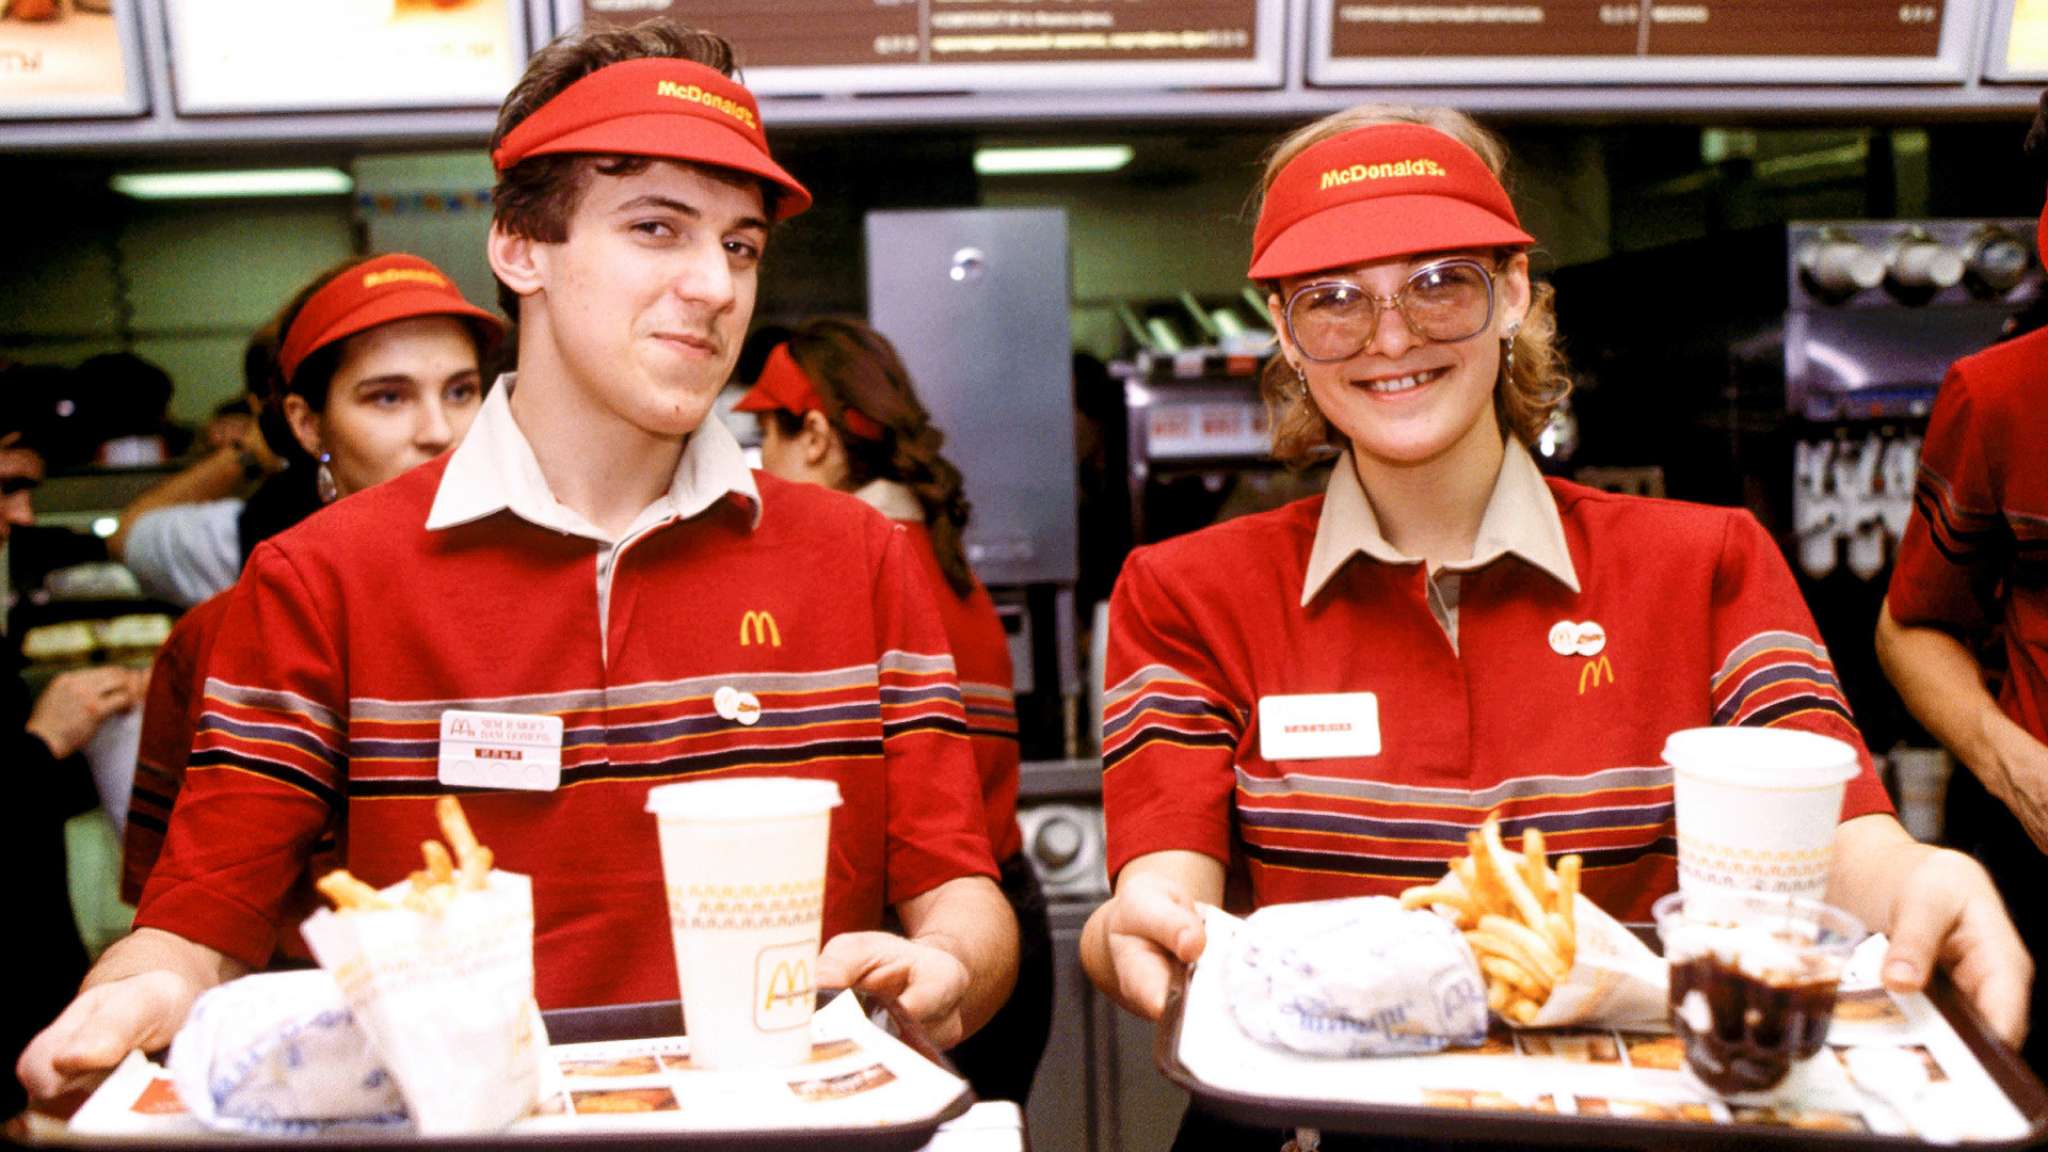 029 McDonald's Employees.jpg